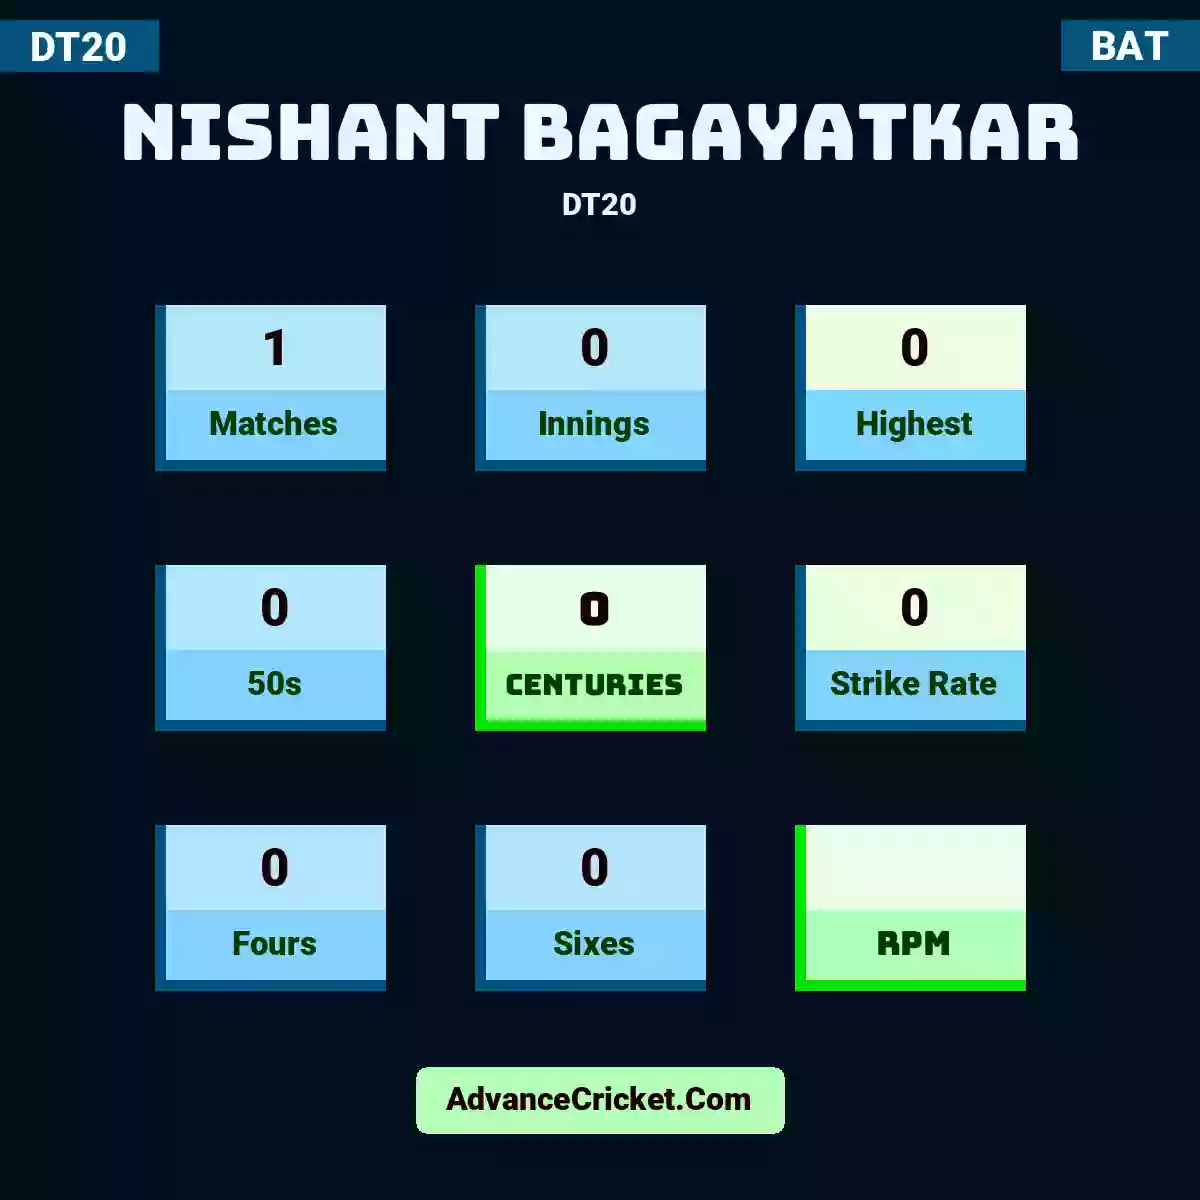 Nishant Bagayatkar DT20 , Nishant Bagayatkar played 1 matches, scored 0 runs as highest, 0 half-centuries, and 0 centuries, with a strike rate of 0. N.Bagayatkar hit 0 fours and 0 sixes.